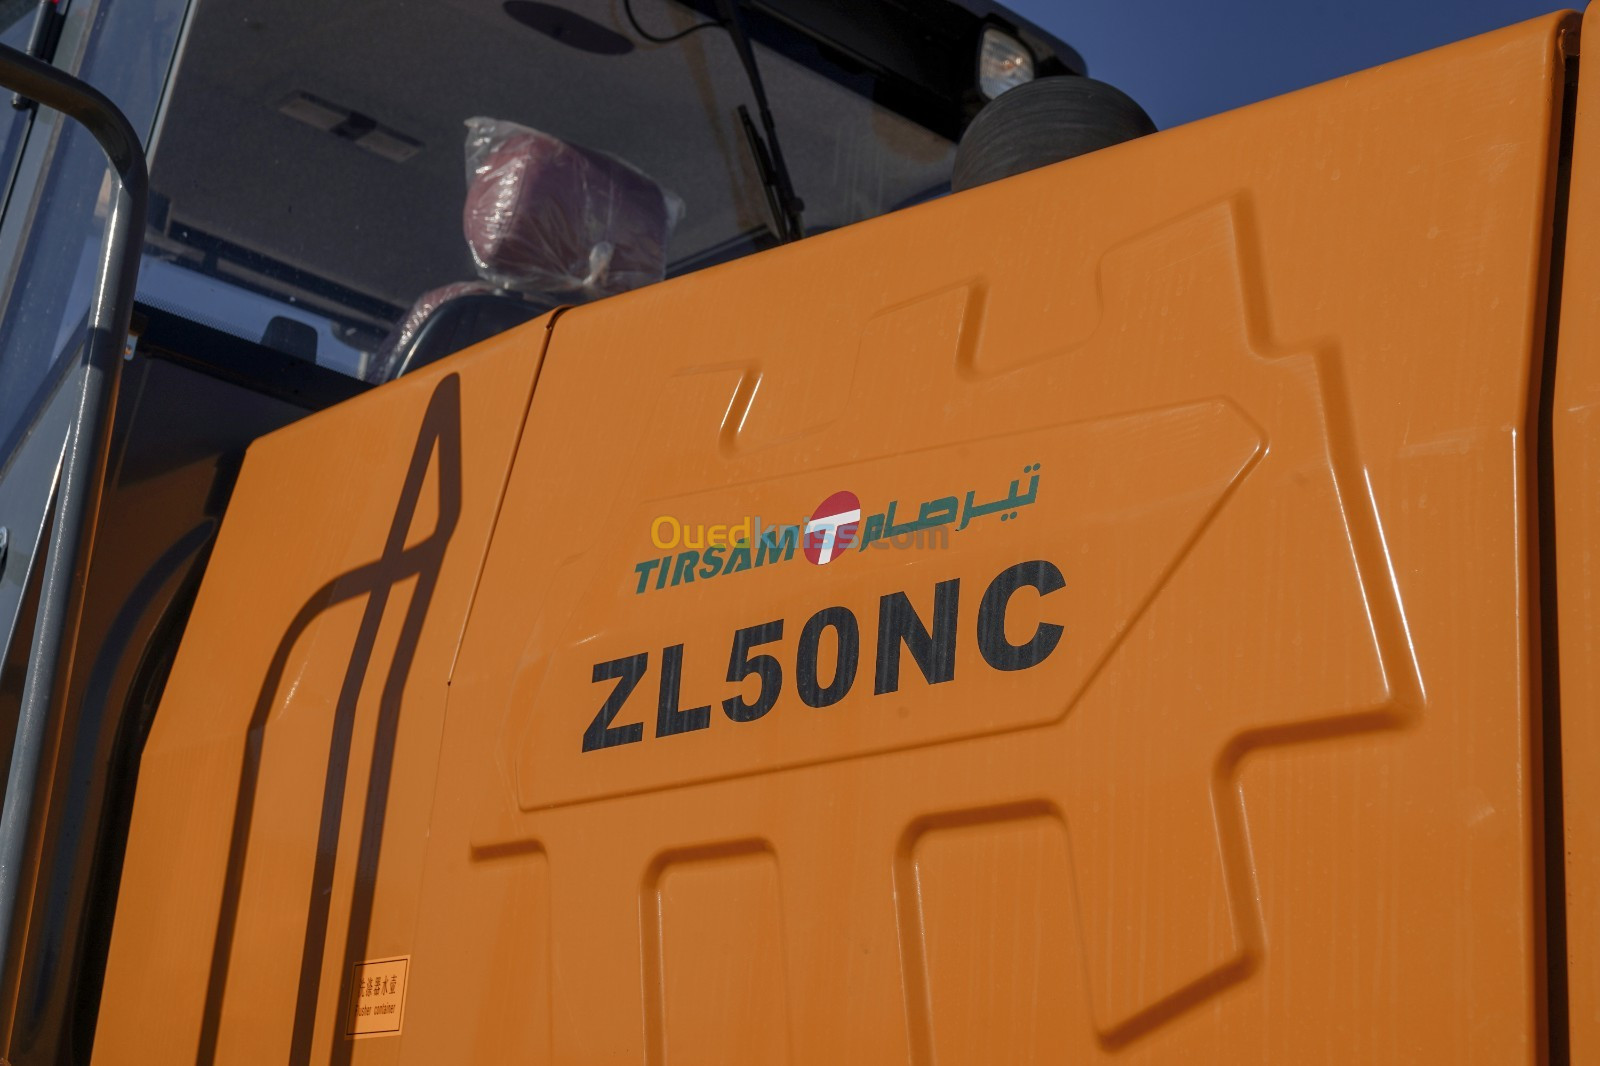 TIRSAM CHARGEUR ZL50NC - ZL50NC الة الشحن 